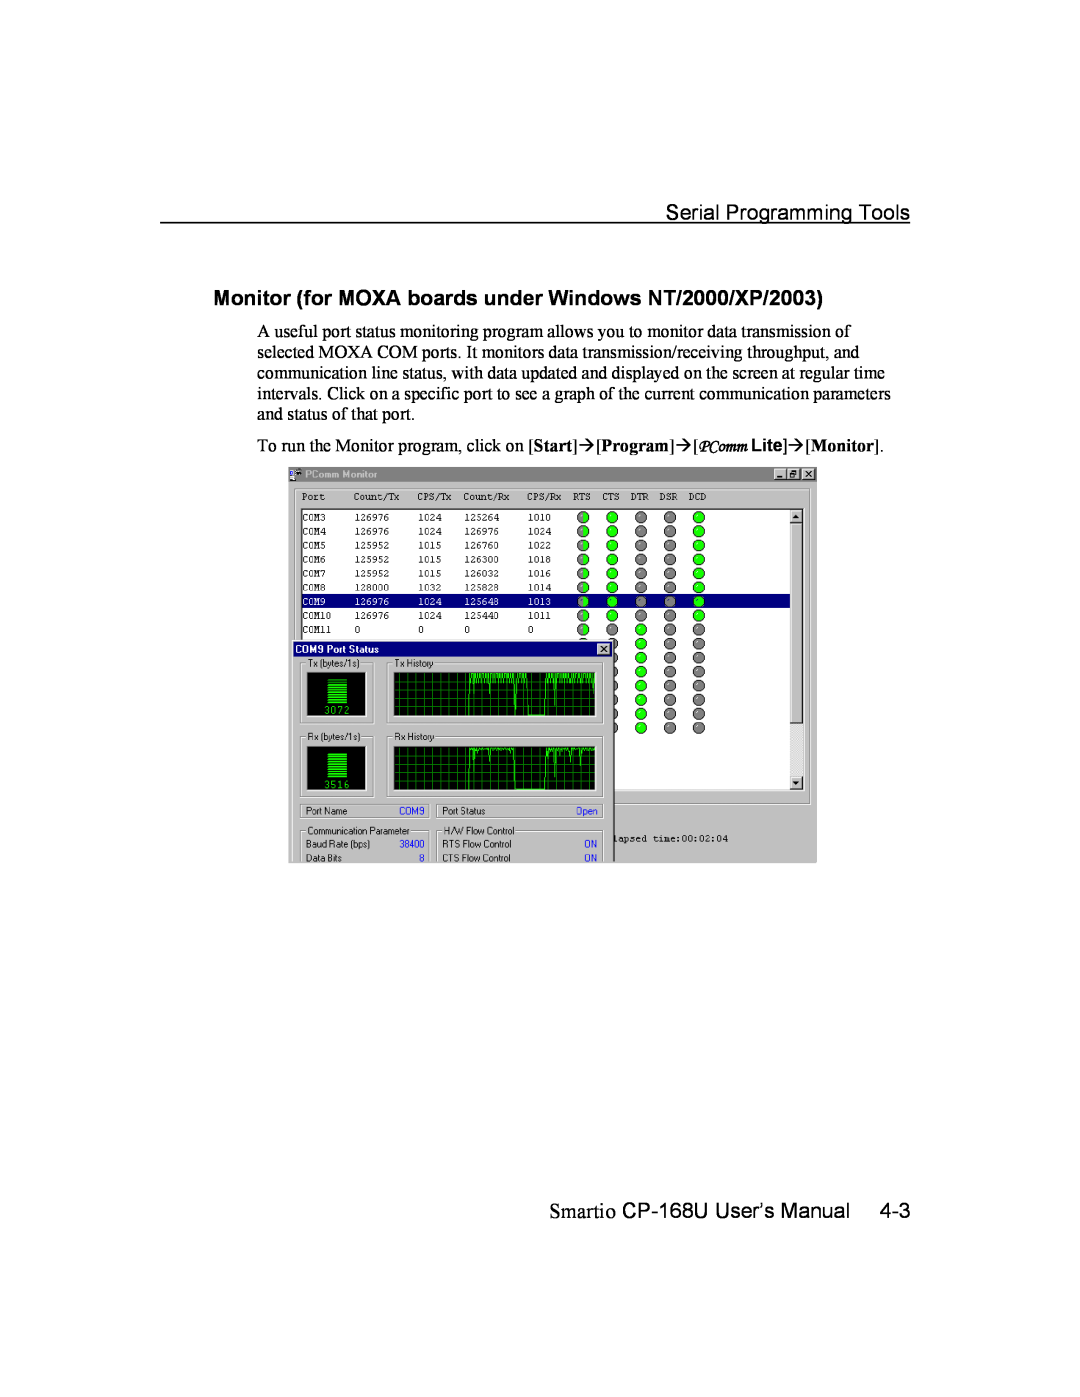 Moxa Technologies CP-168U user manual Serial Programming Tools, Monitor for MOXA boards under Windows NT/2000/XP/2003 